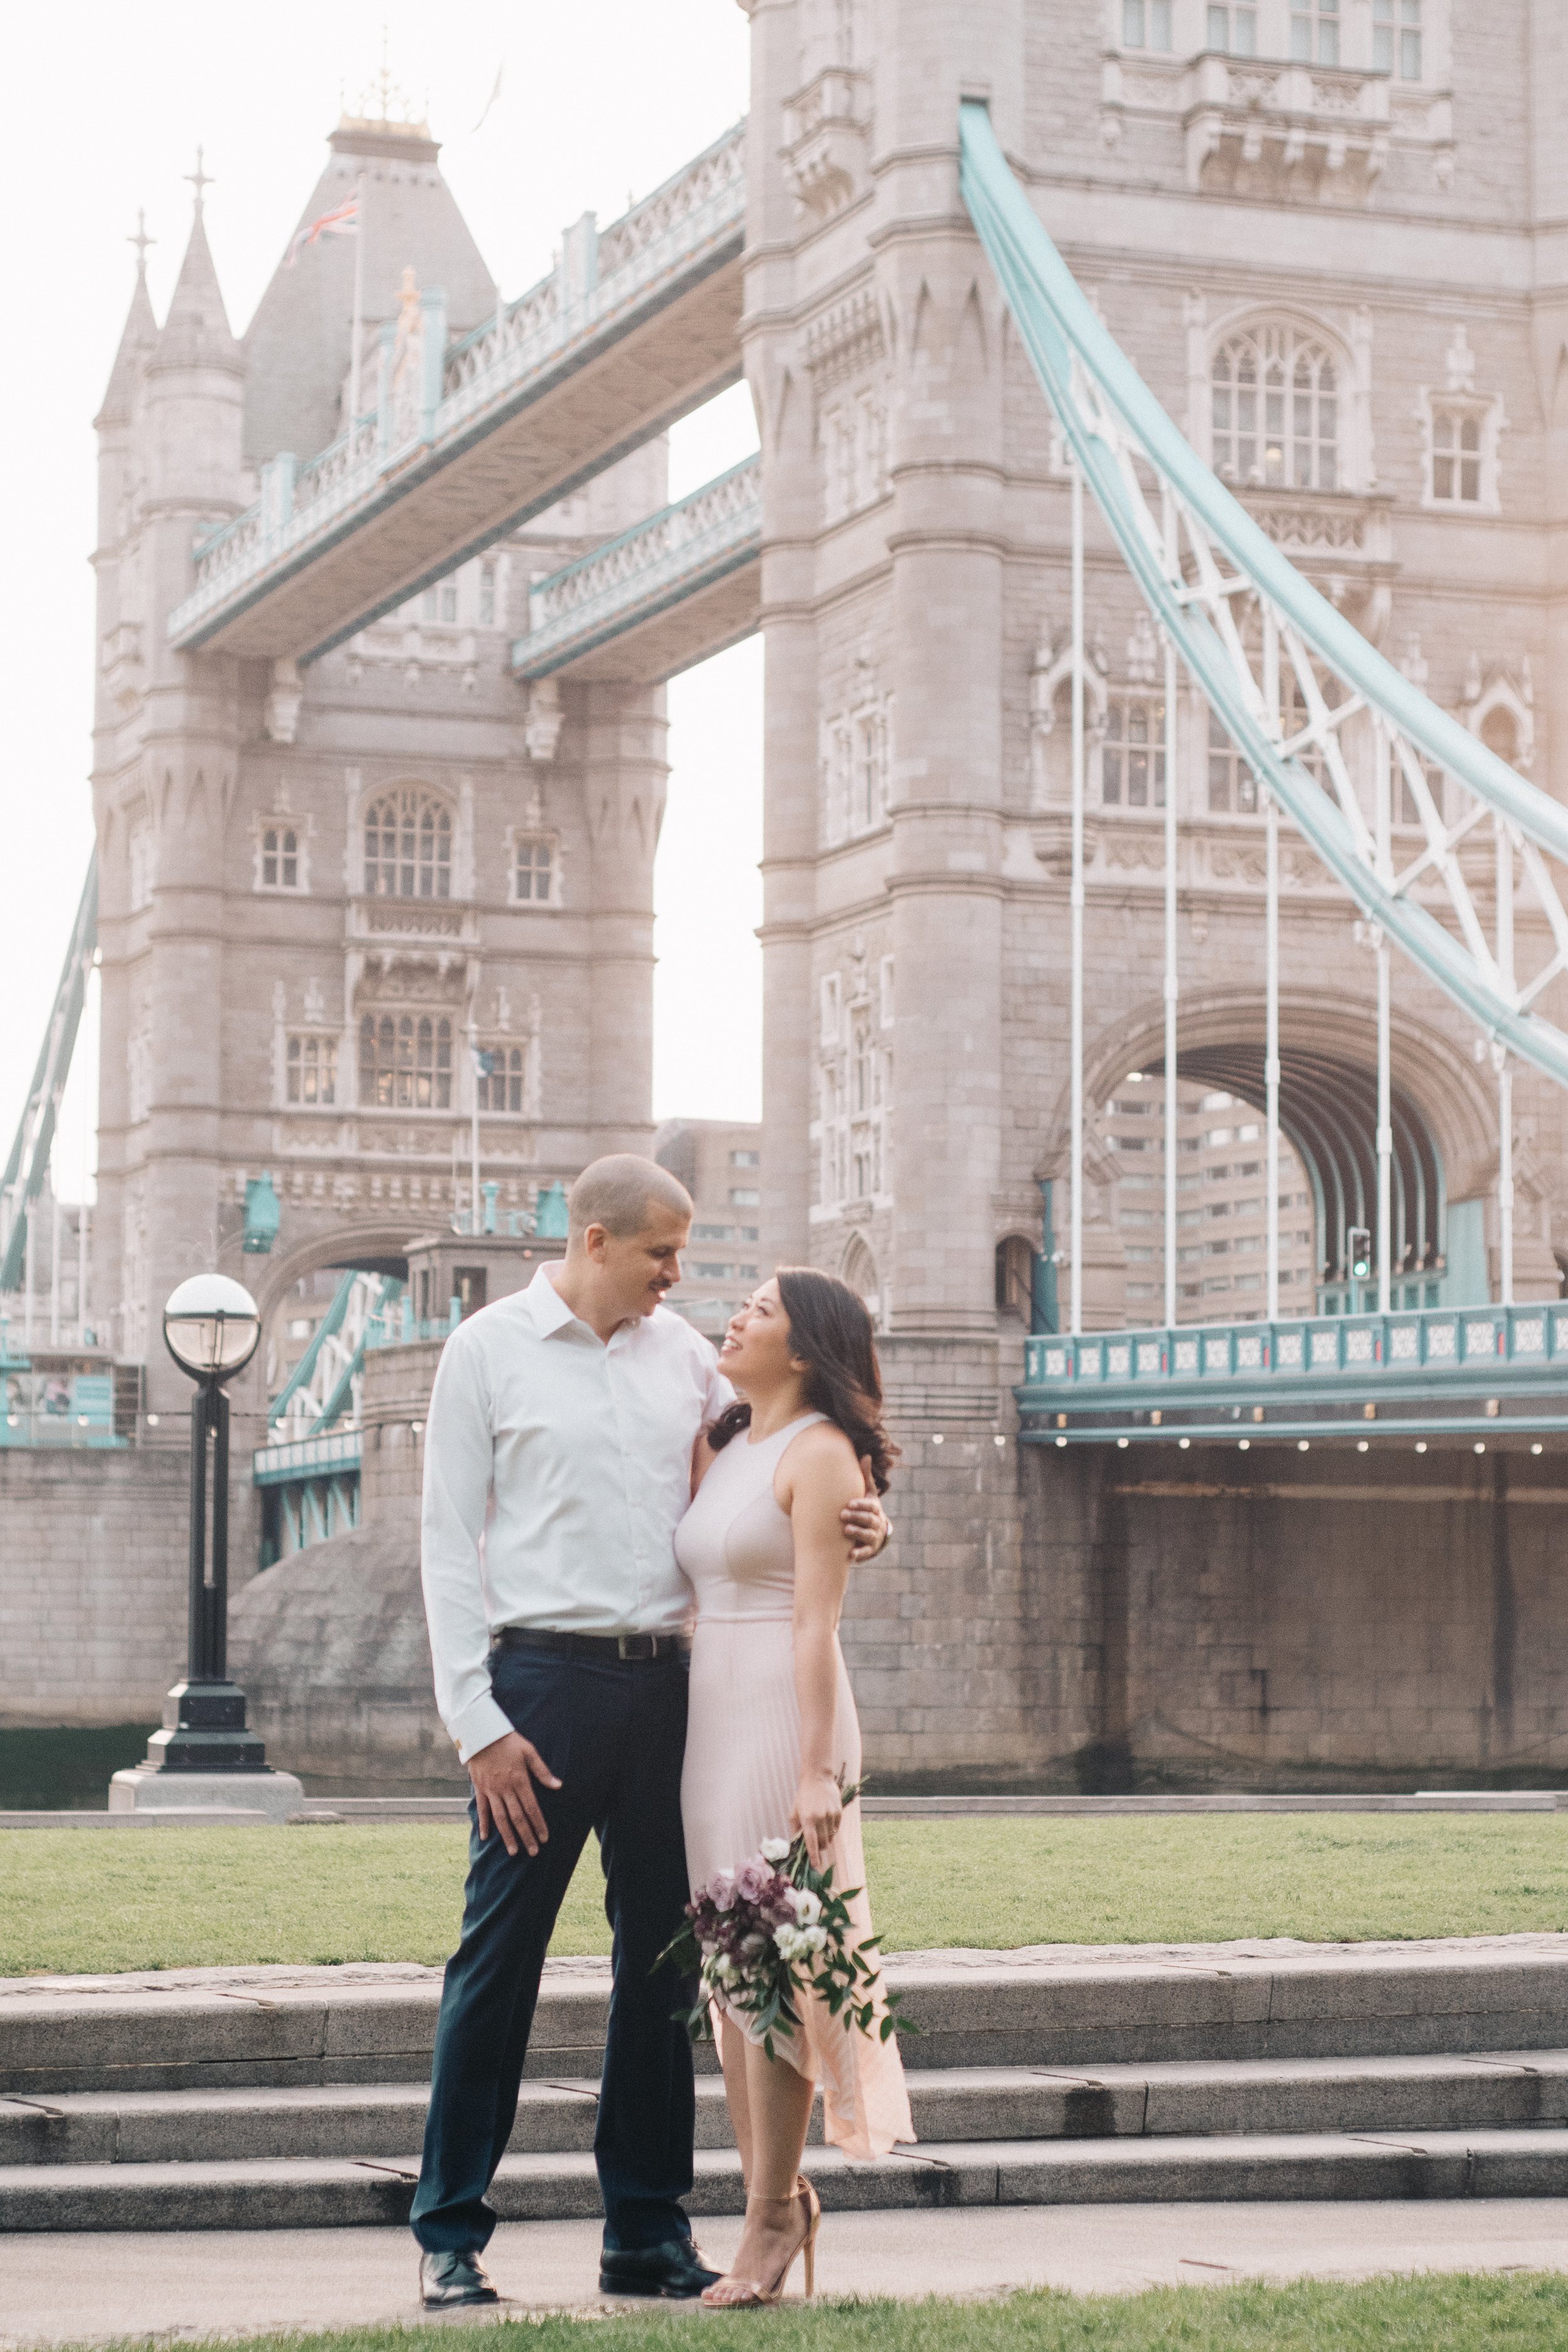 Couple's European engagement session in London, UK photographed by European destination wedding photographers, Ugo Photography